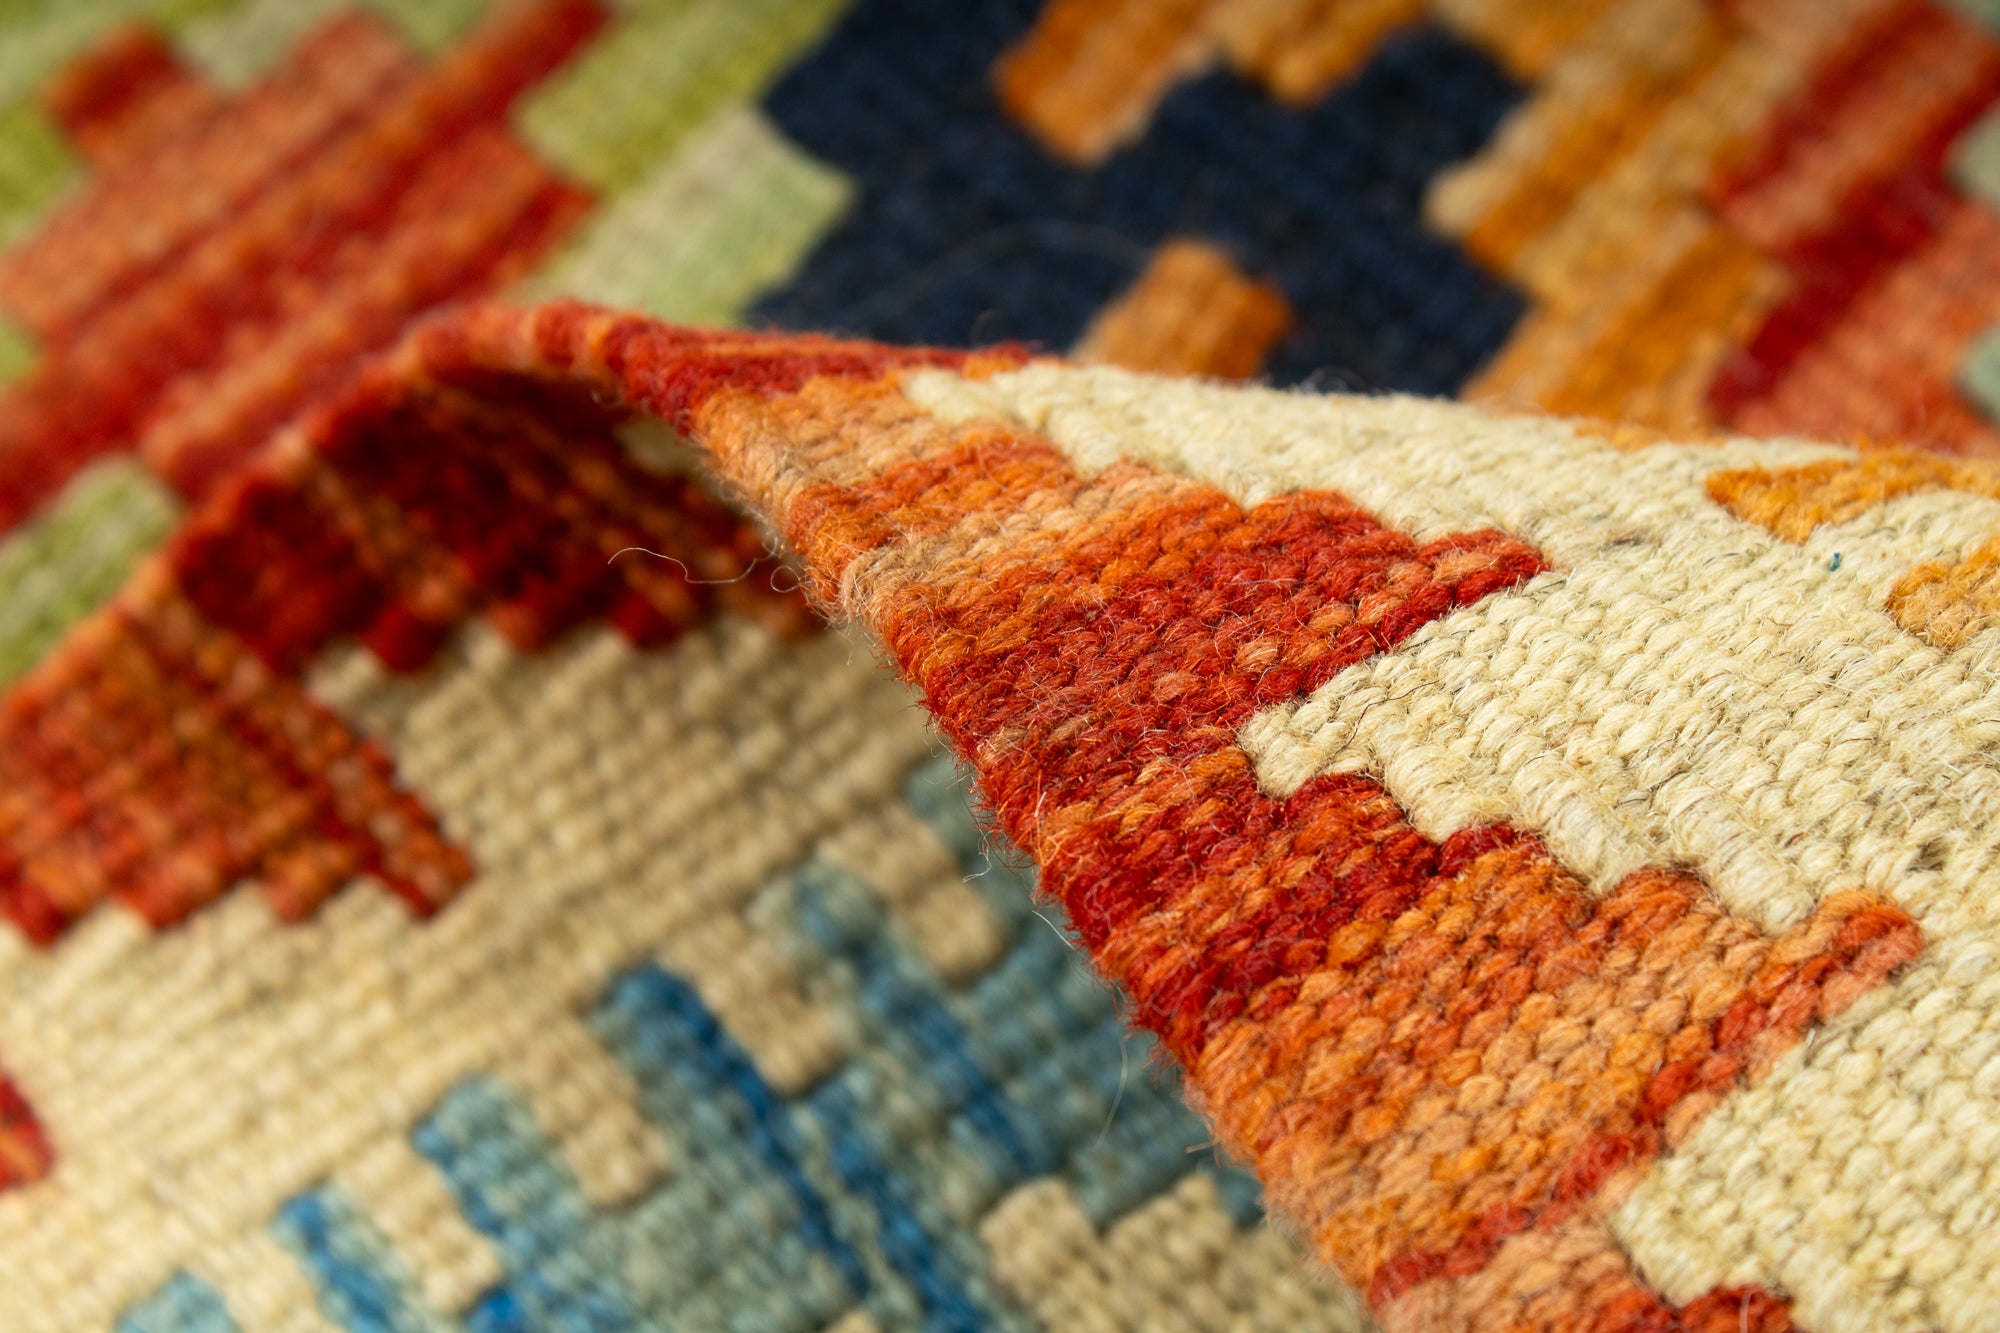 Tribal Design Colorful Pak Kilim Accent Rug <br> 2'0 x 3'0